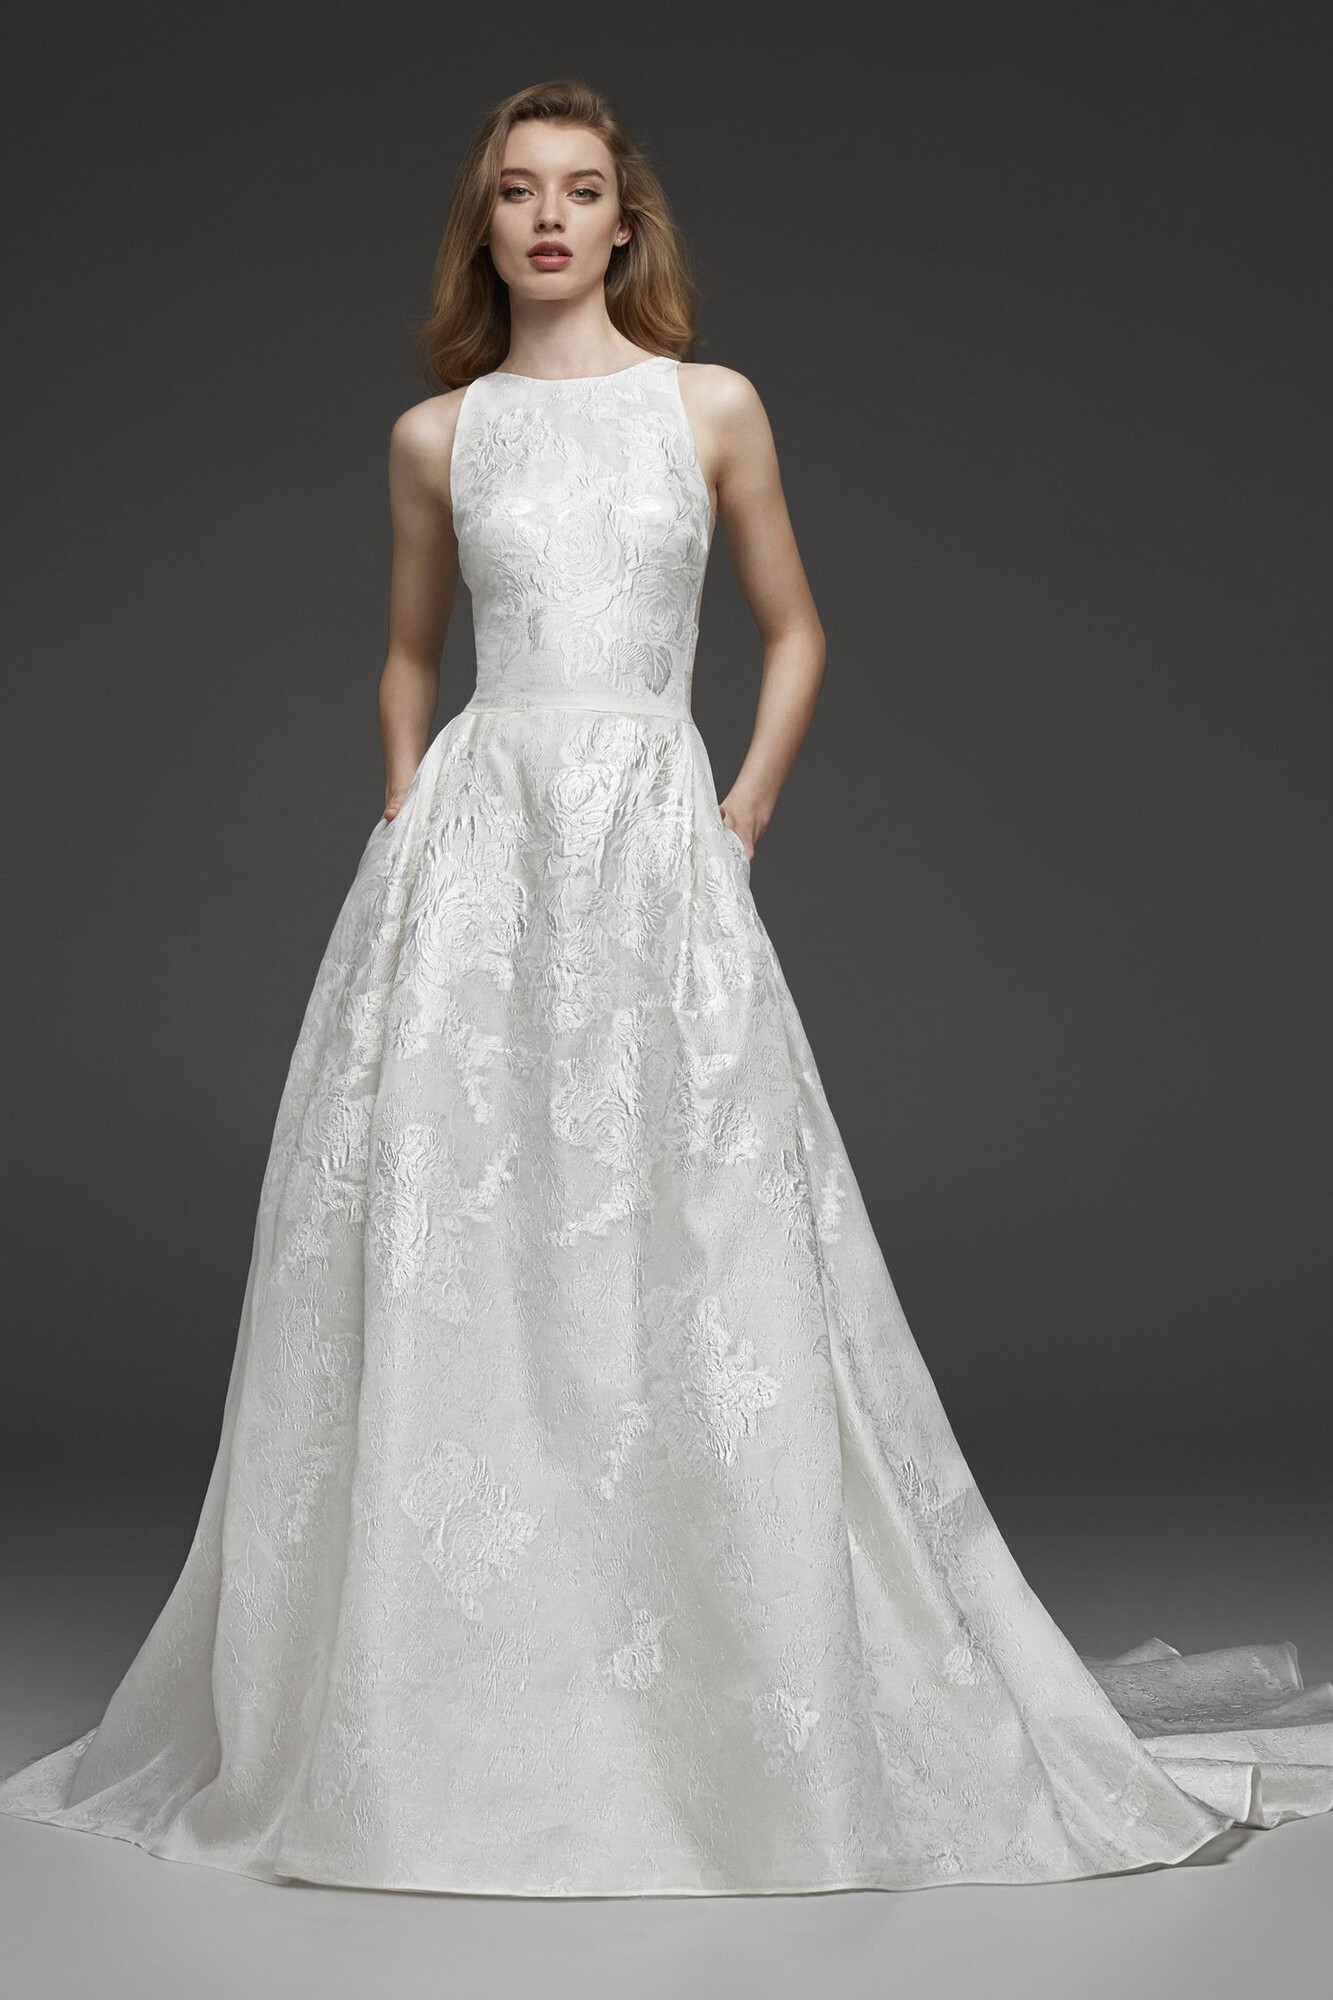 Cynthia Wedding Dress from Atelier Pronovias - hitched.co.uk